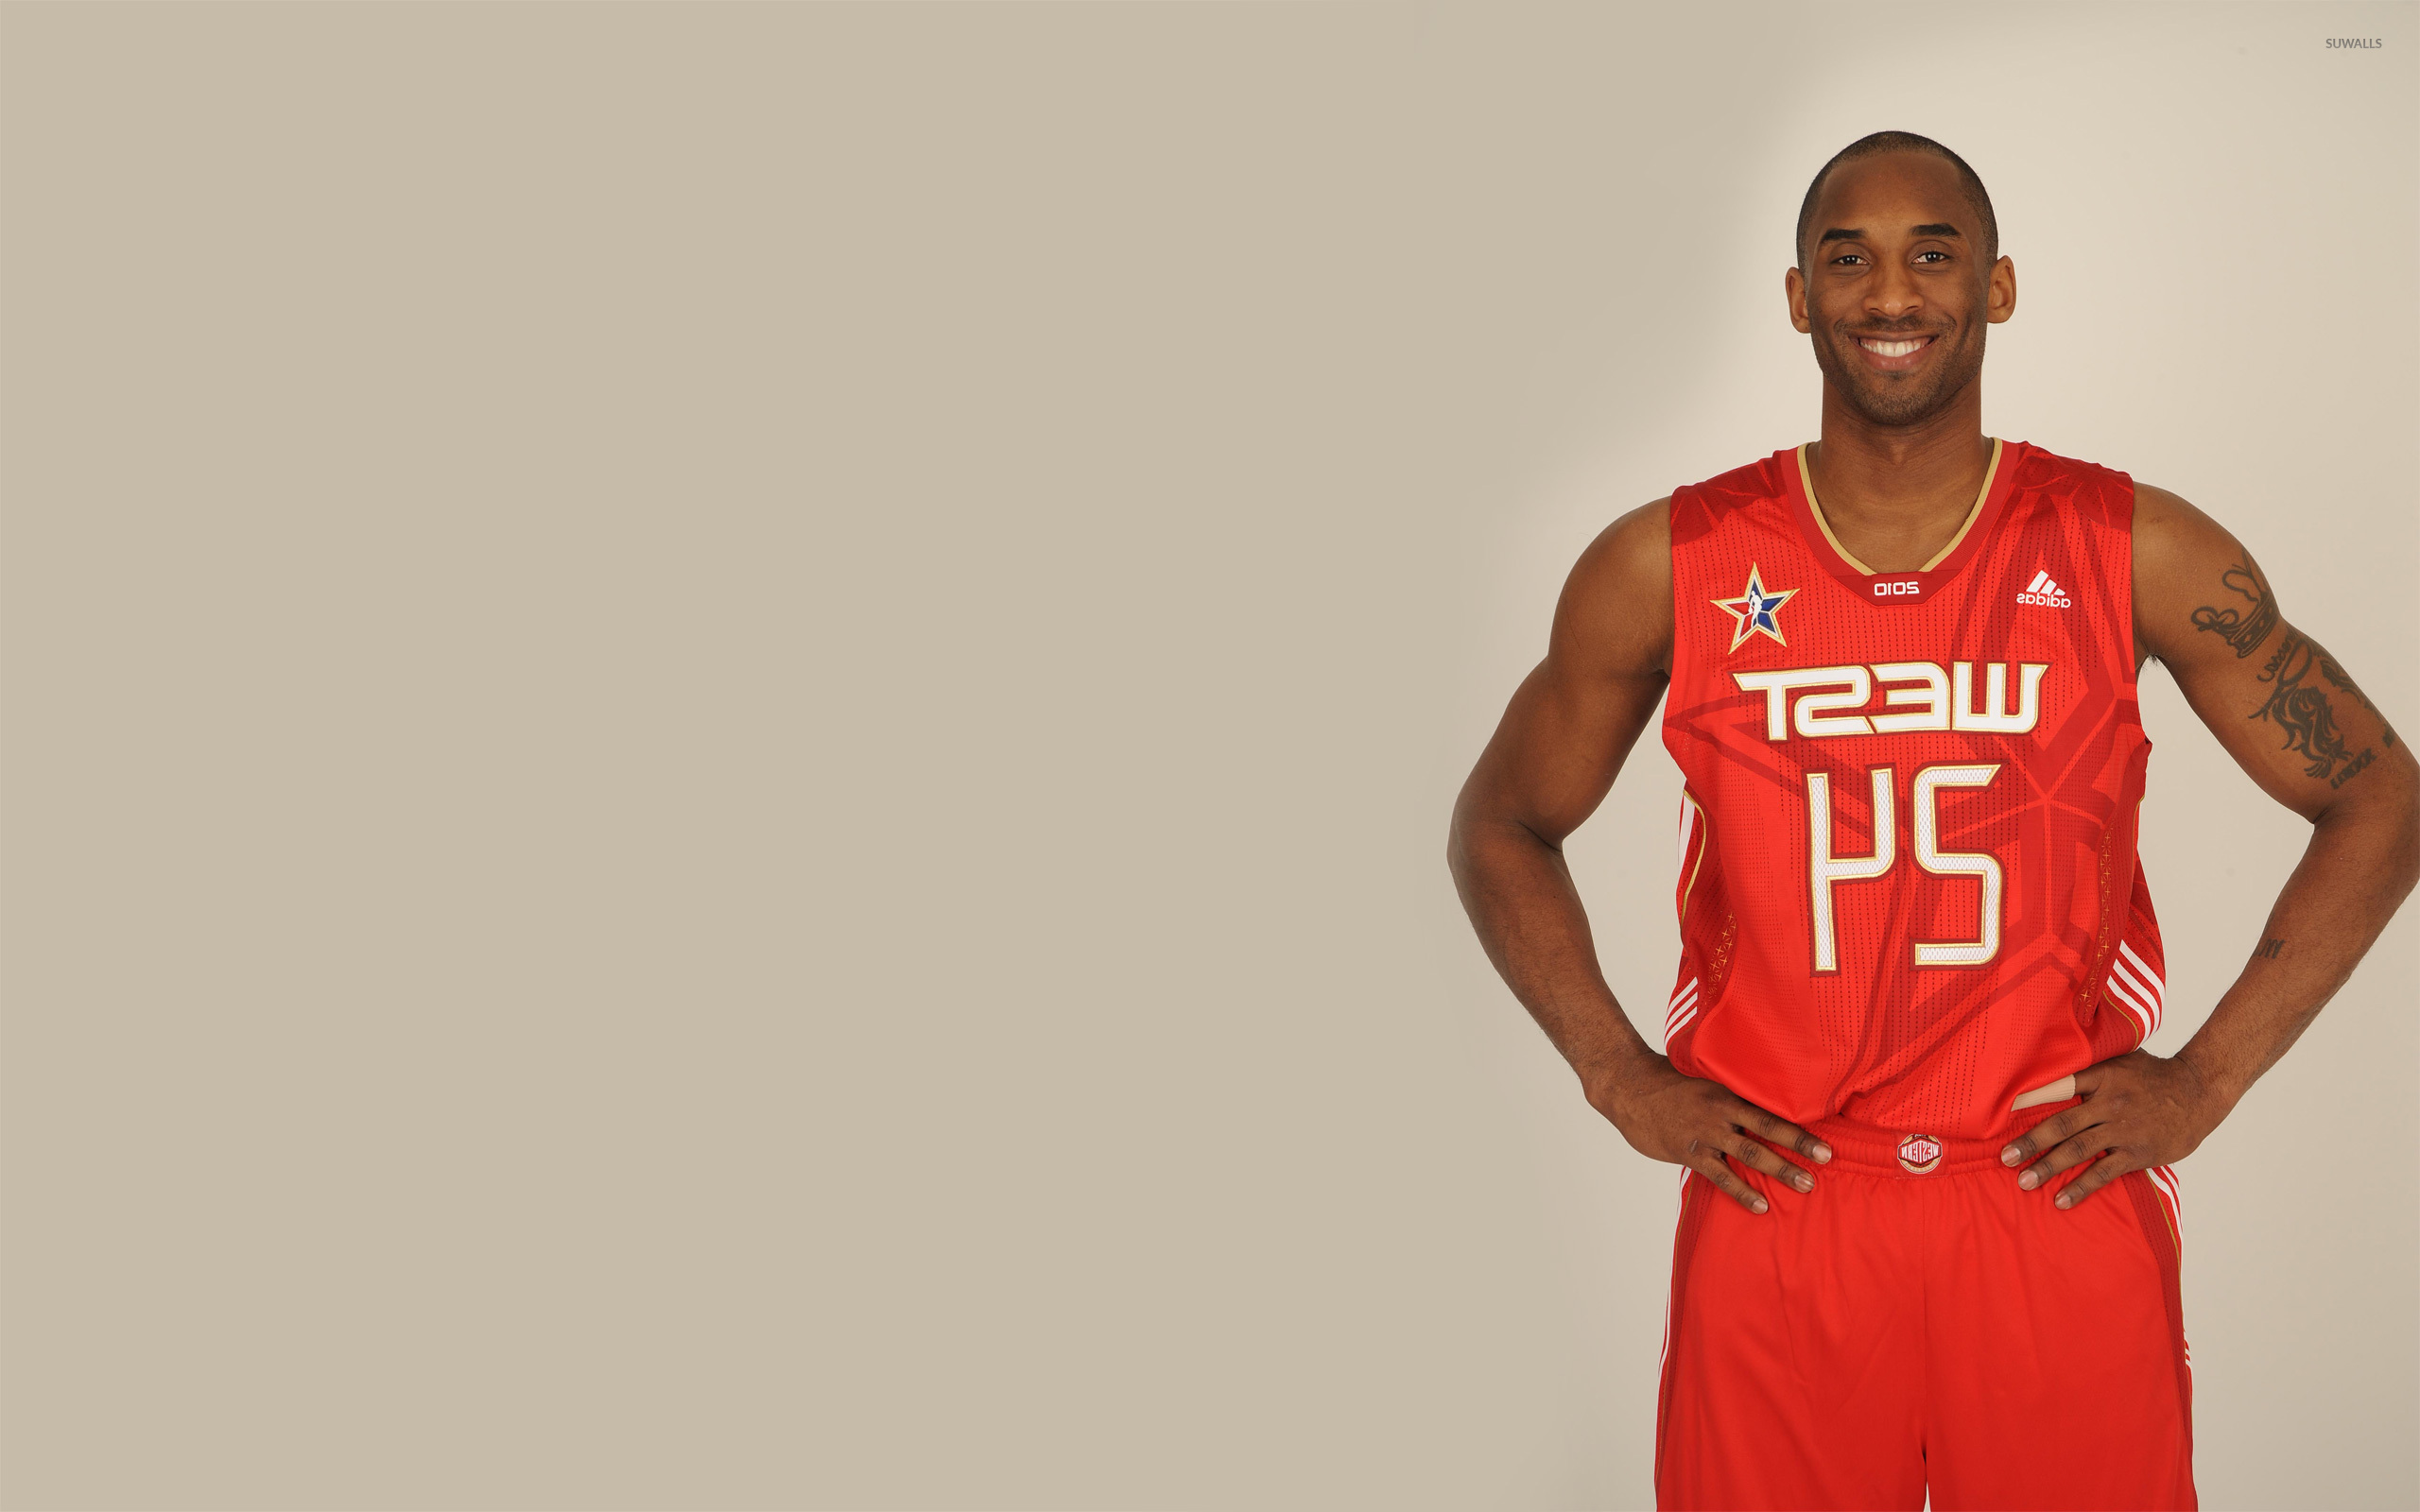 kobe bryant wallpaper,basketball player,sportswear,sports uniform,jersey,red